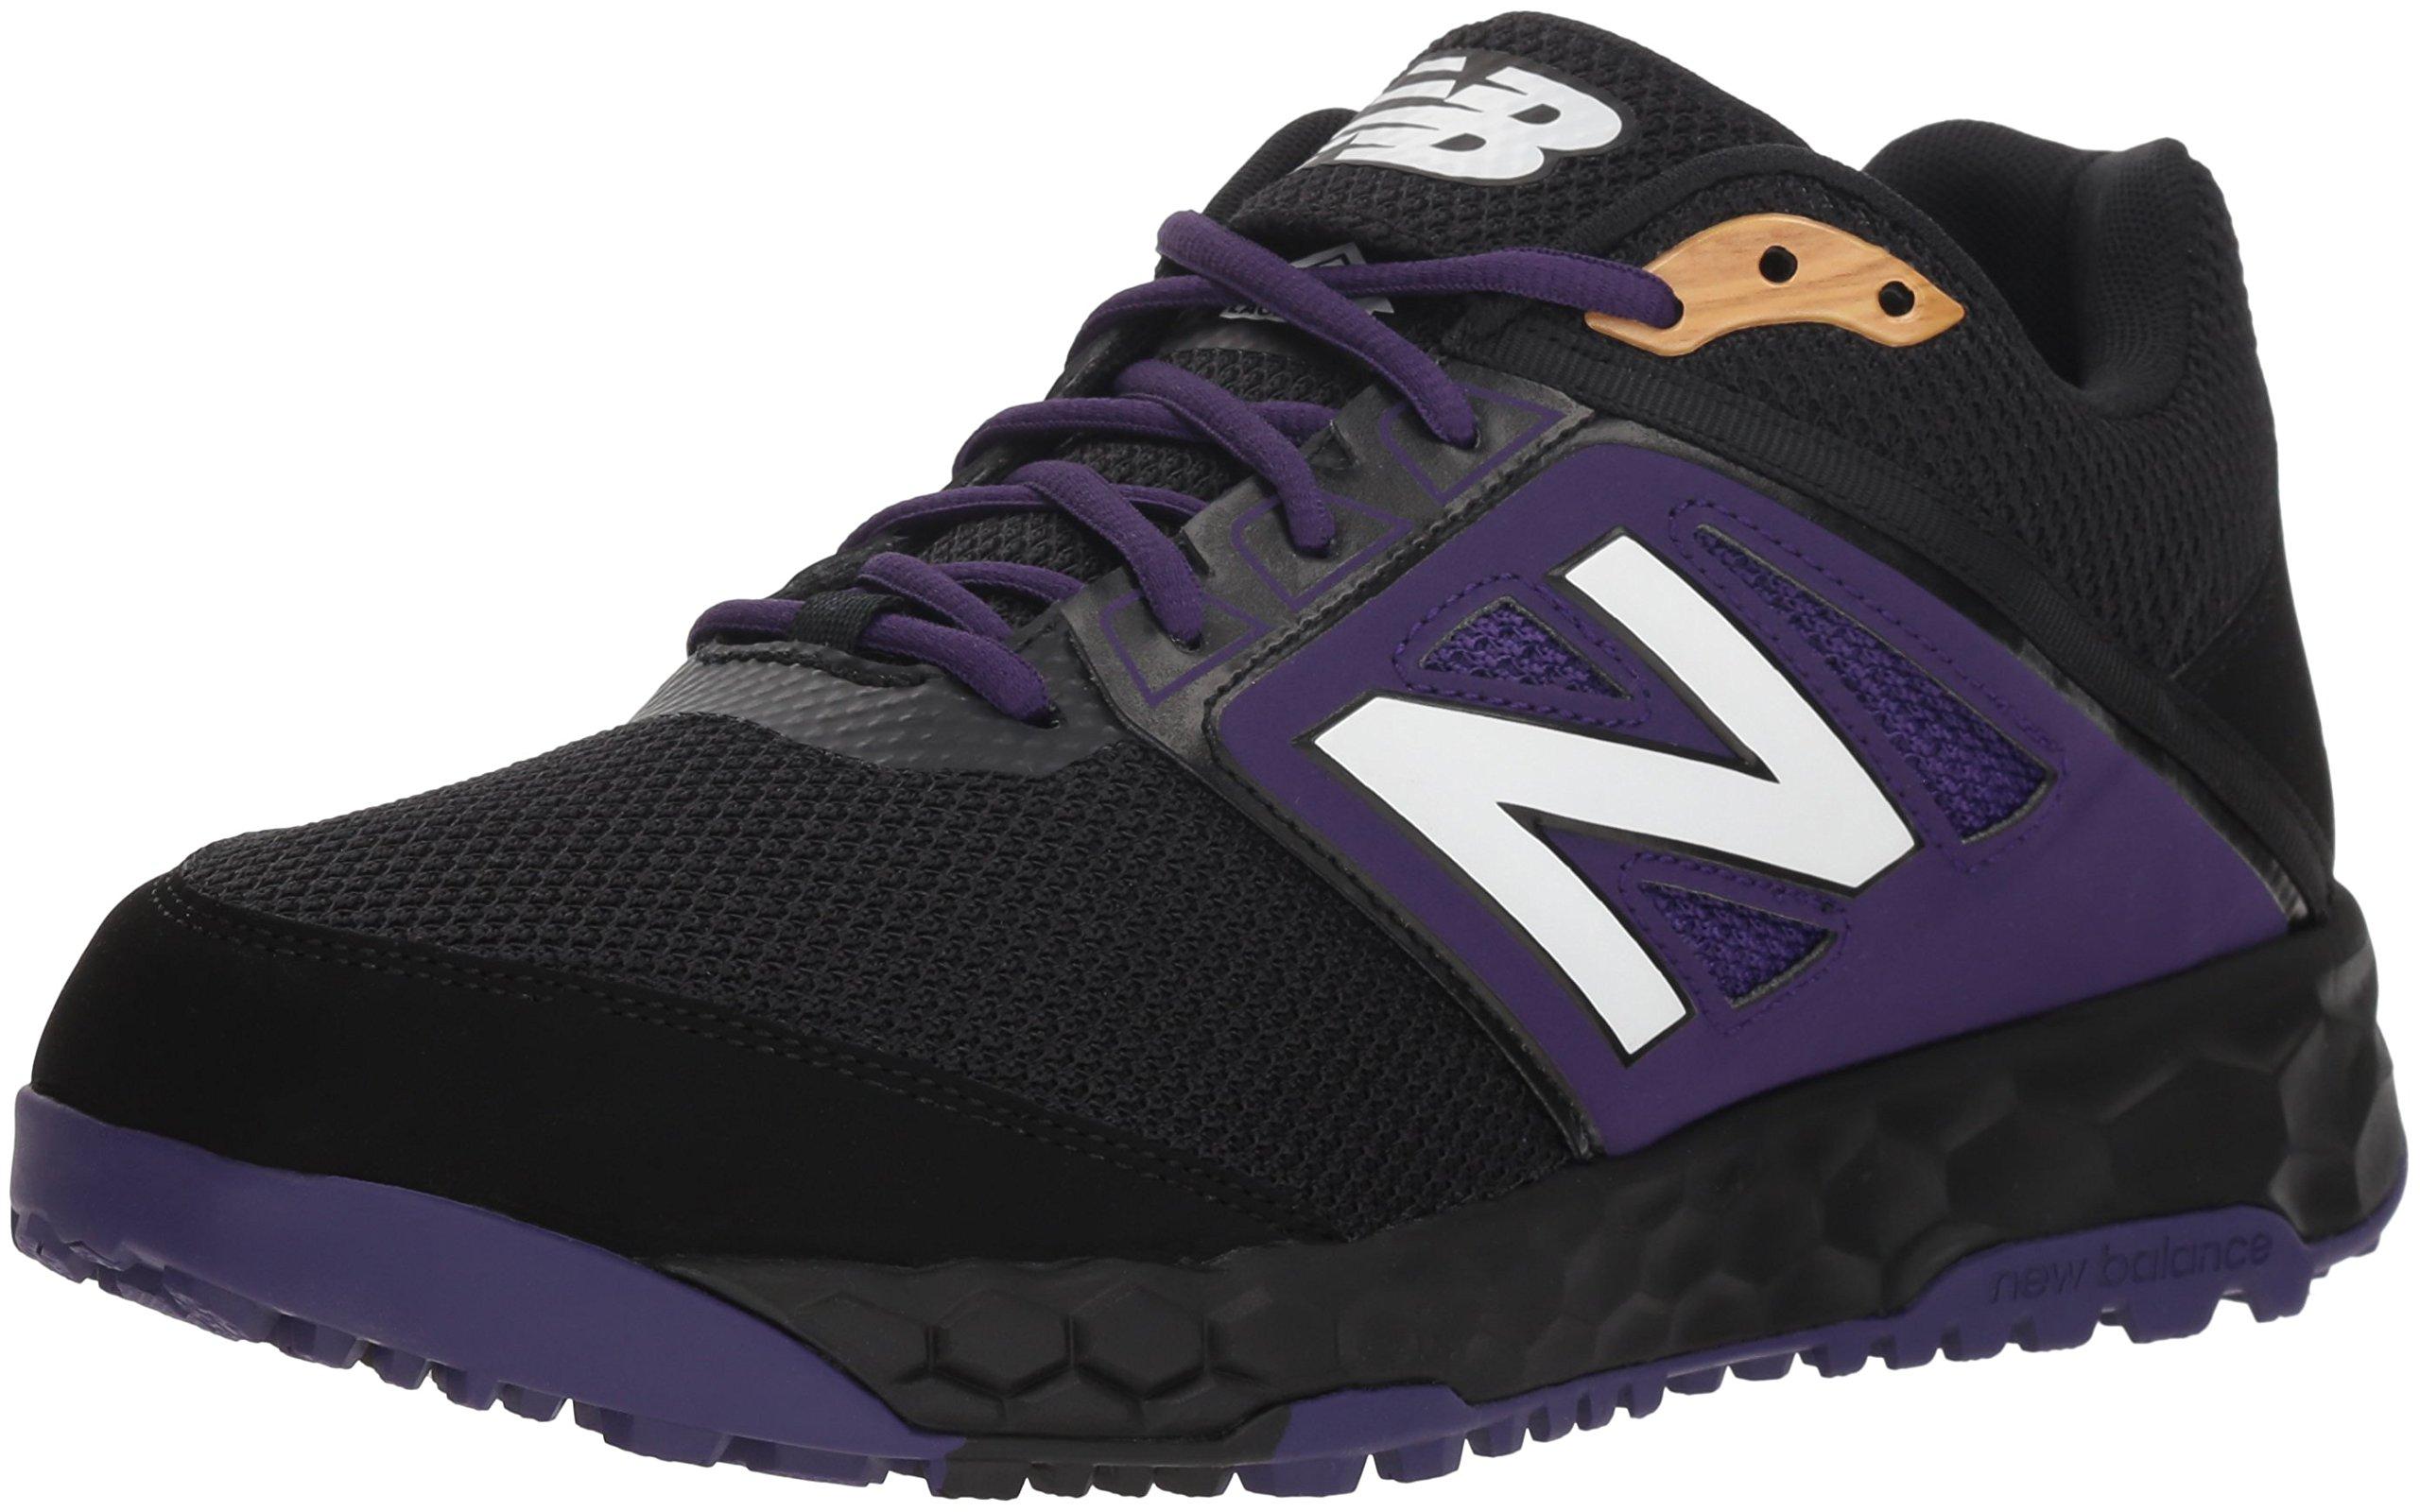 New Balance Rubber 3000 V4 Turf Baseball Shoe in Black/Purple (Black ...